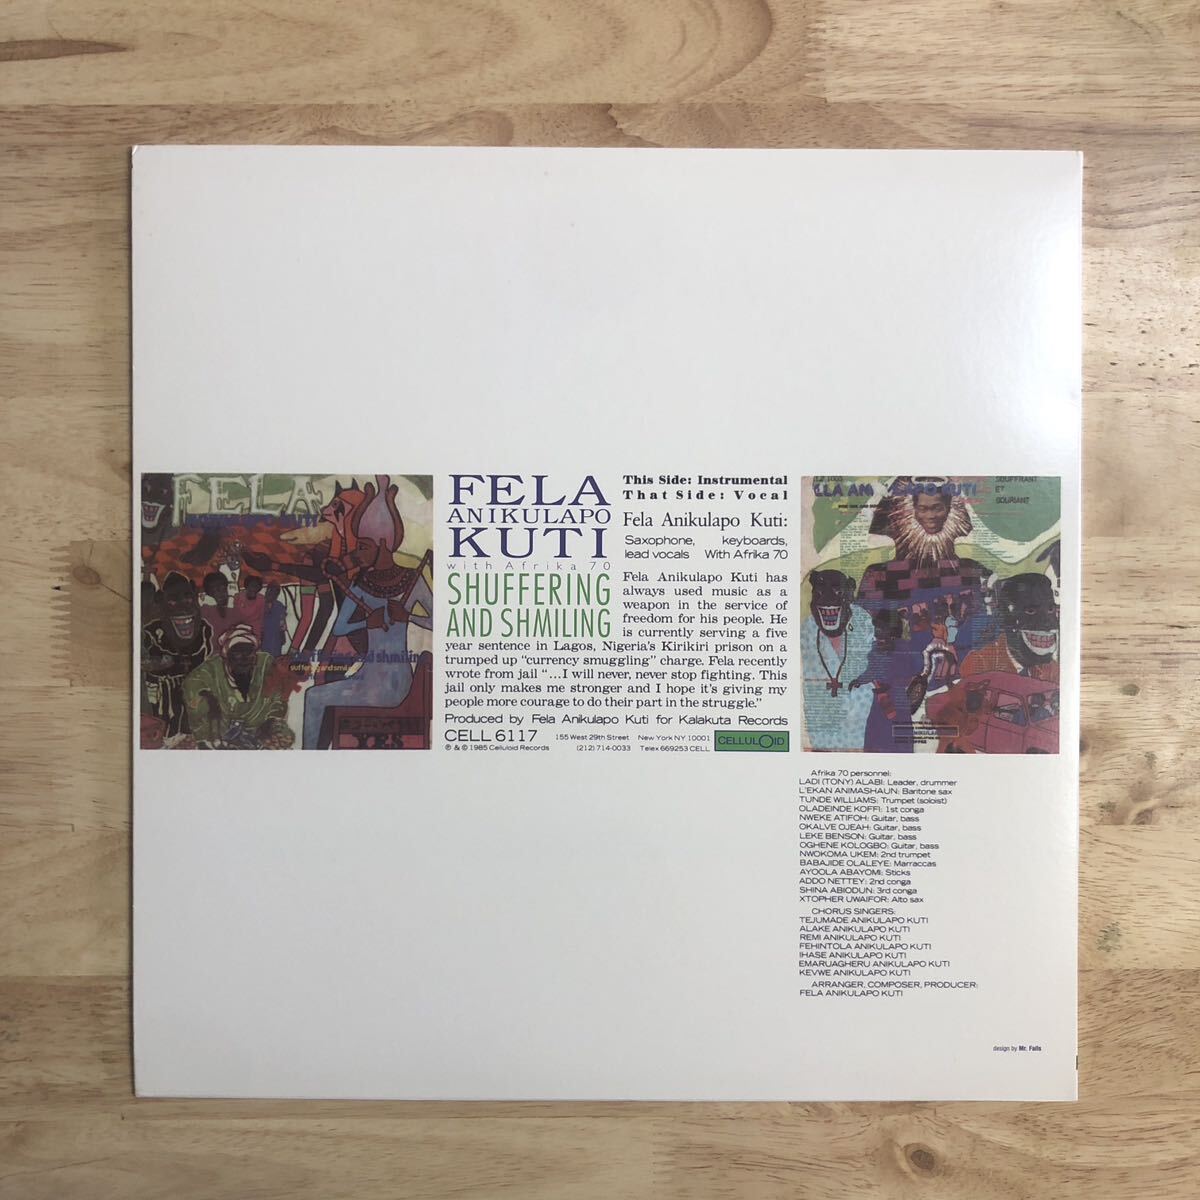 LP 美品 米CELLULOID高音質盤 FELA ANIKULAPO KUTI with AFRIKA 70/SHUFFERING AND SHMILING[US盤:'85年PRESS(オリジナルは78年NIGERIA盤)]_画像2